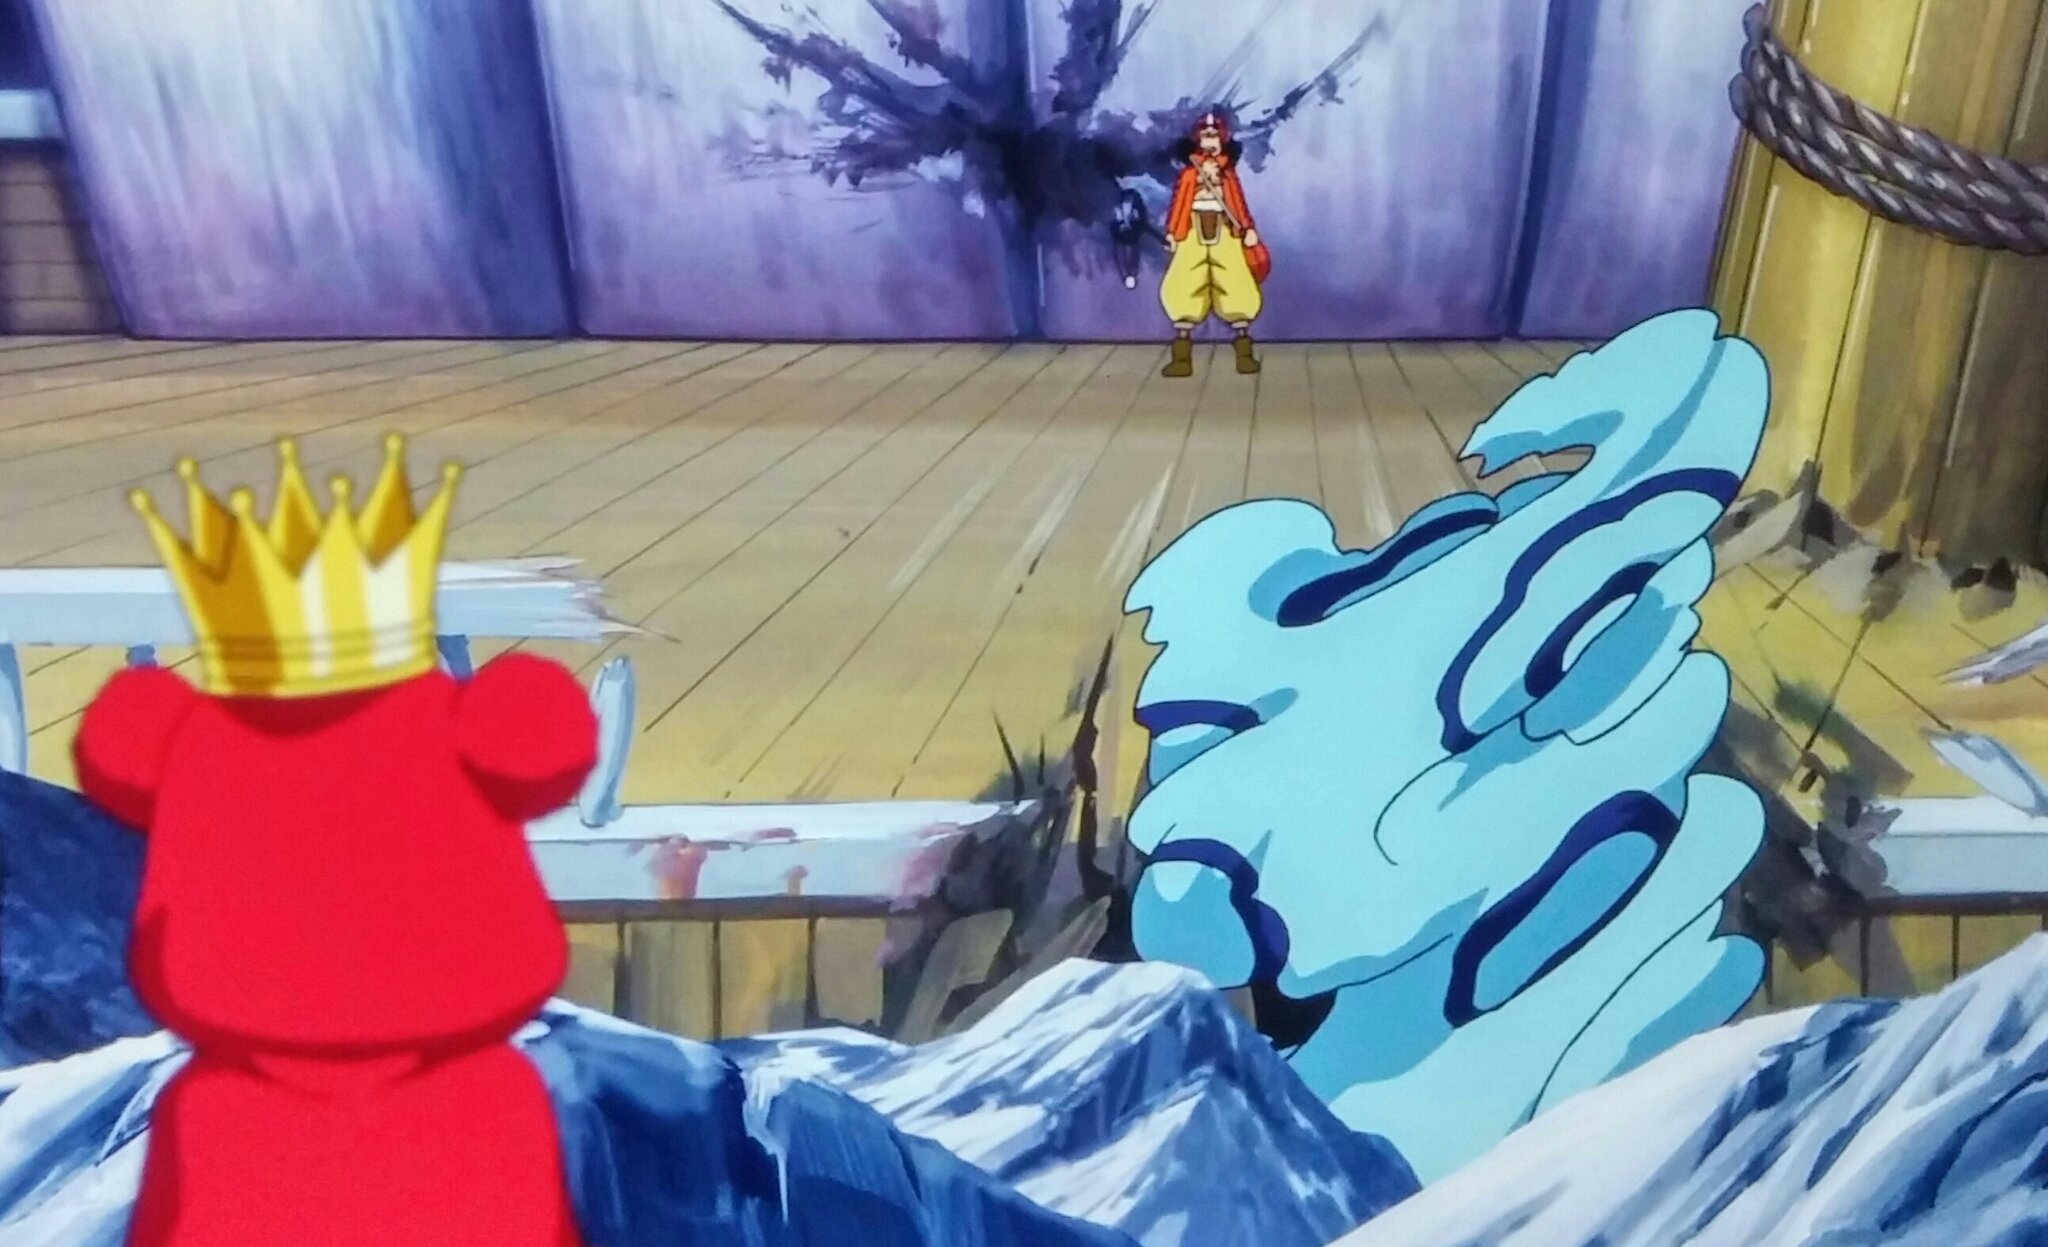 Satoru 3 Animations One Piece Dressrosa Episode 22 The Scenes Trebol Doesn T Die Easily トレーボル ベタベタの実 ワンピース Onepiece T Co Mw5nx4d9va Twitter